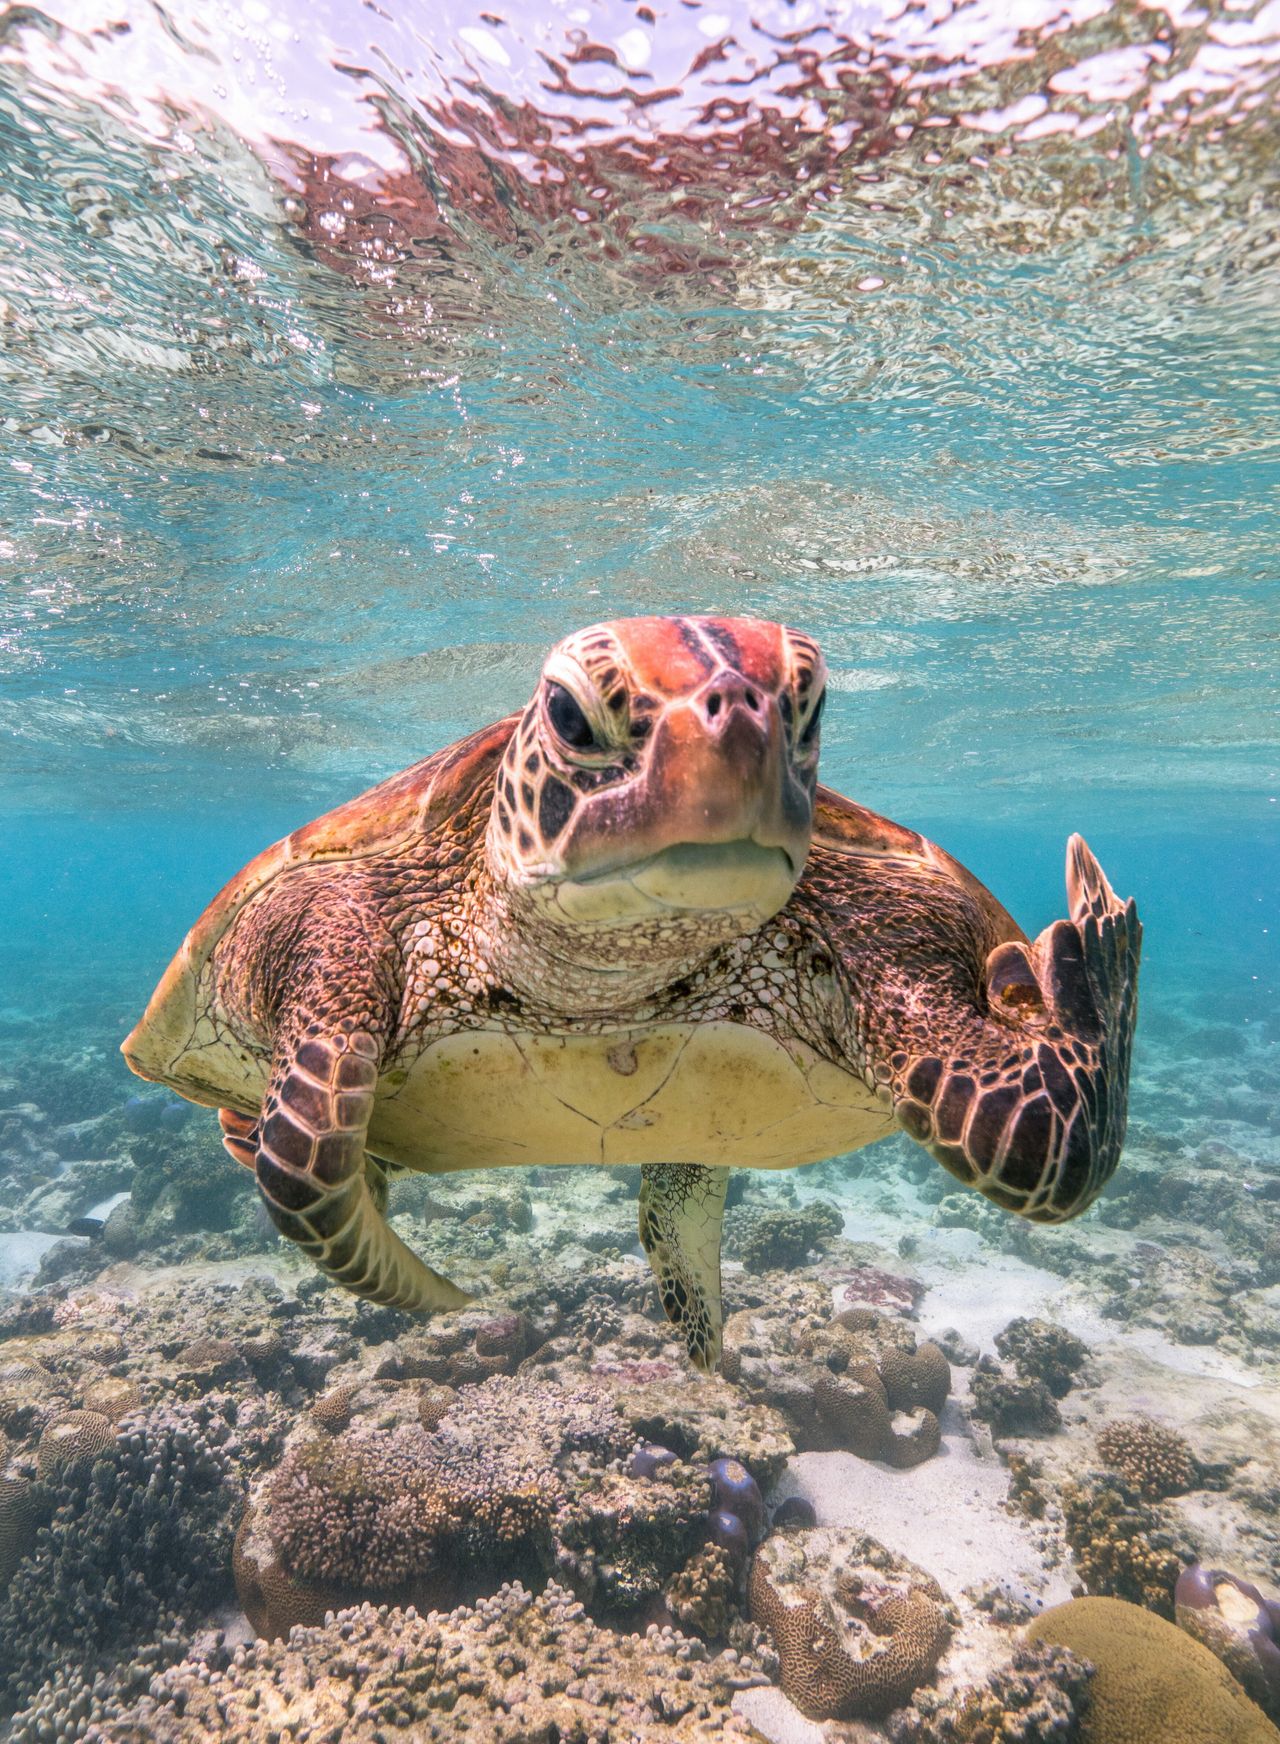 "Terry the Turtle Flipping the Bird" was taken in Lady Elliot Island in Queensland, Australia.